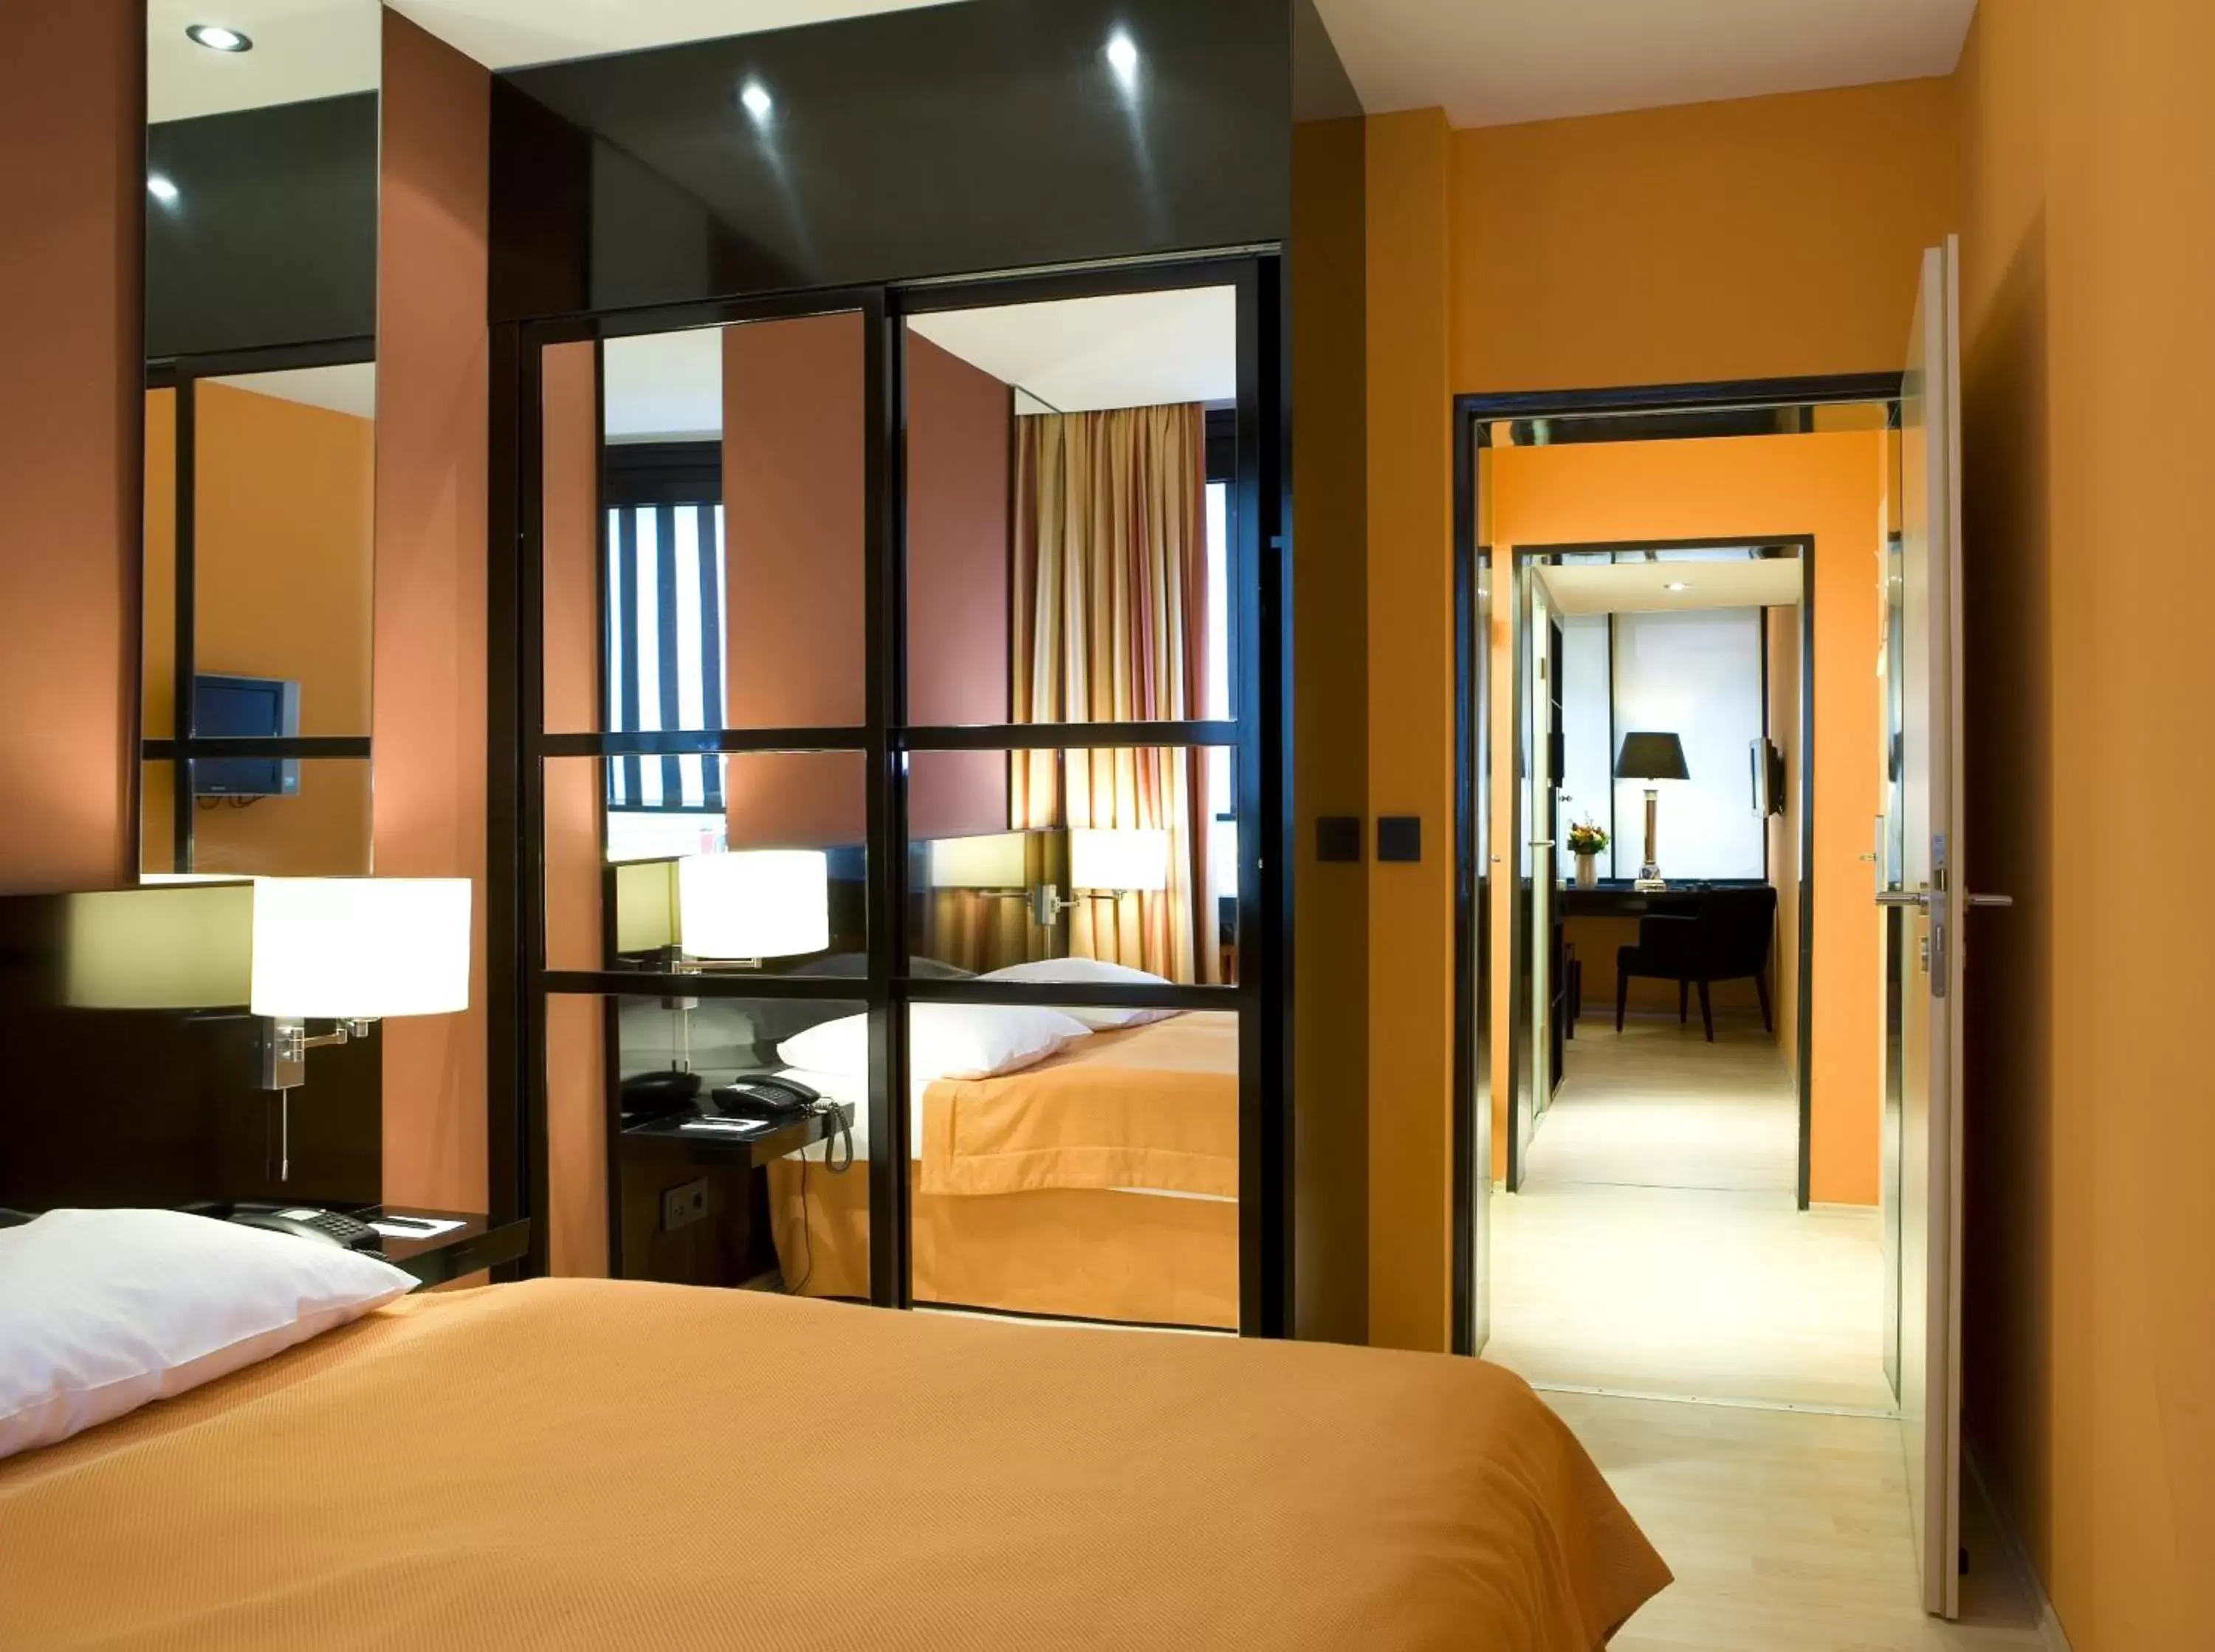 Triple Room in Relexa Hotel Bellevue an der Alster